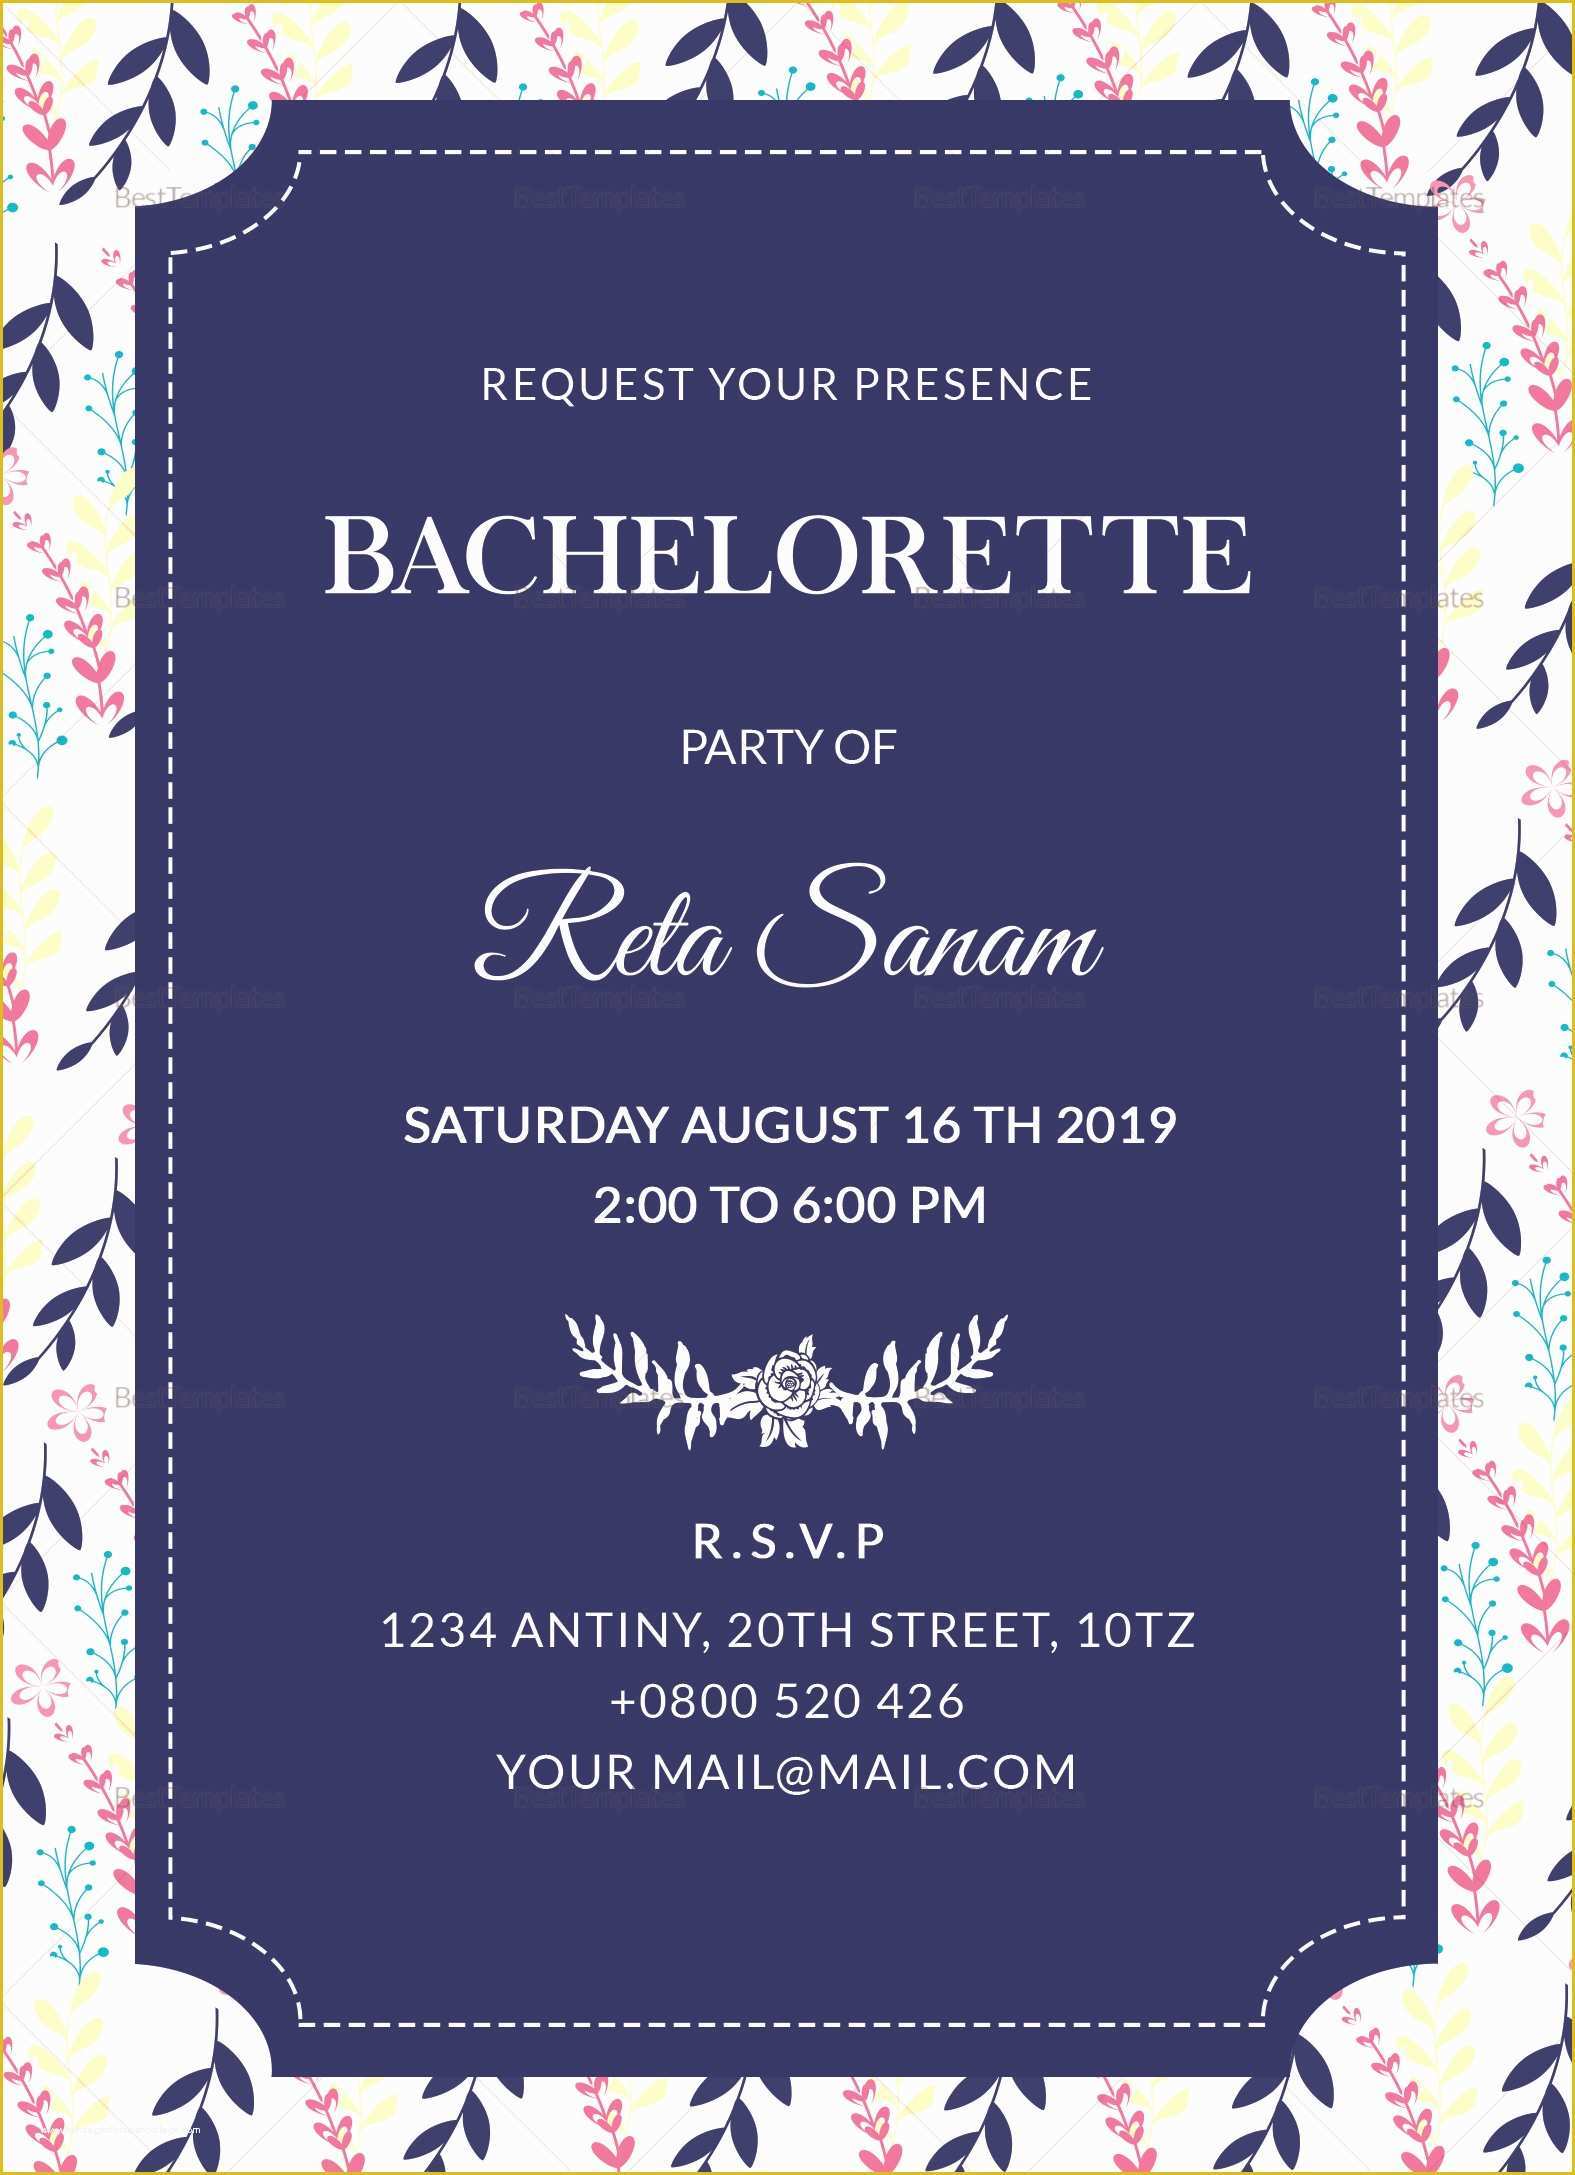 Bachelorette Party Invitation Templates Free Download Of Elegant Bachelorette Party Invitation Design Template In